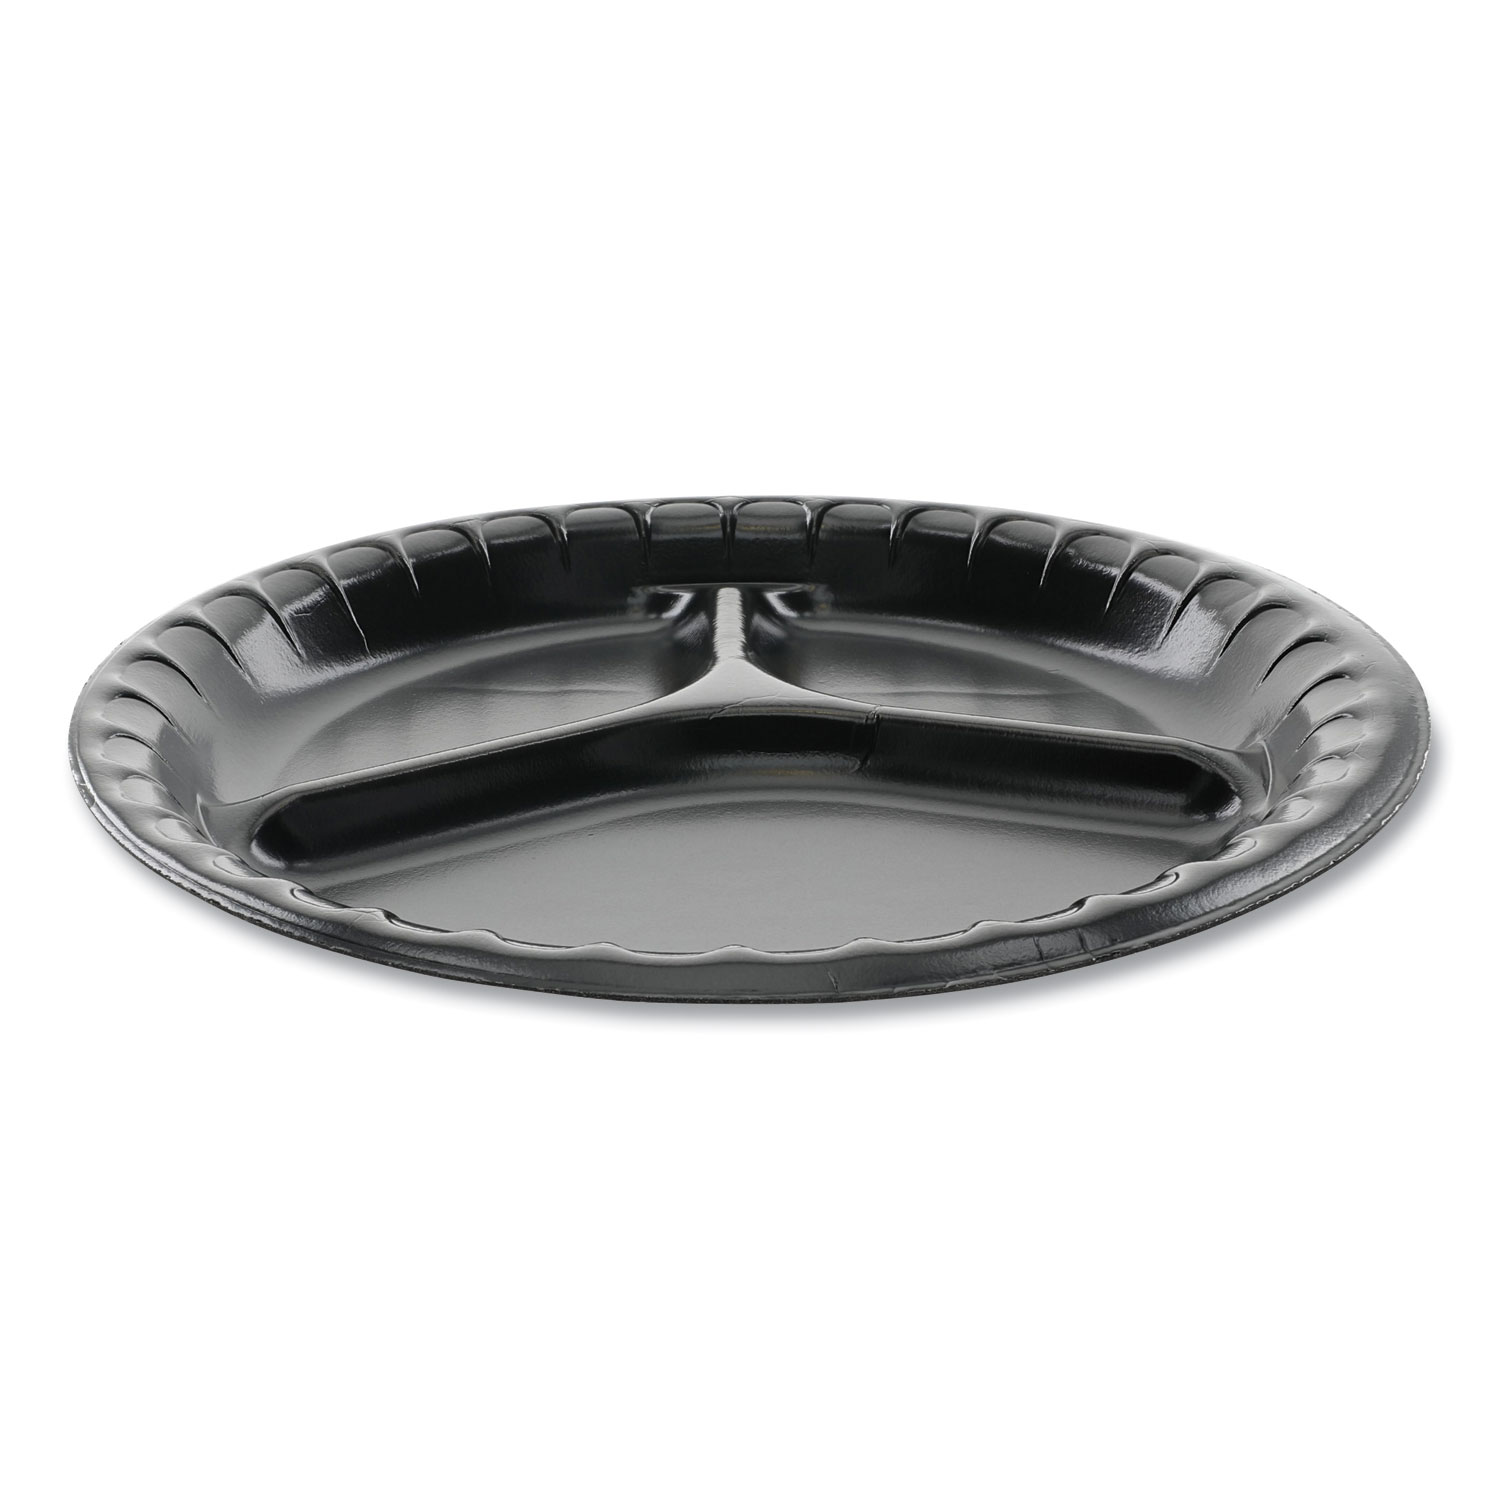 Pactiv Laminated Foam Dinnerware, Plate, 10.25 Diameter, Black, 540/Carton